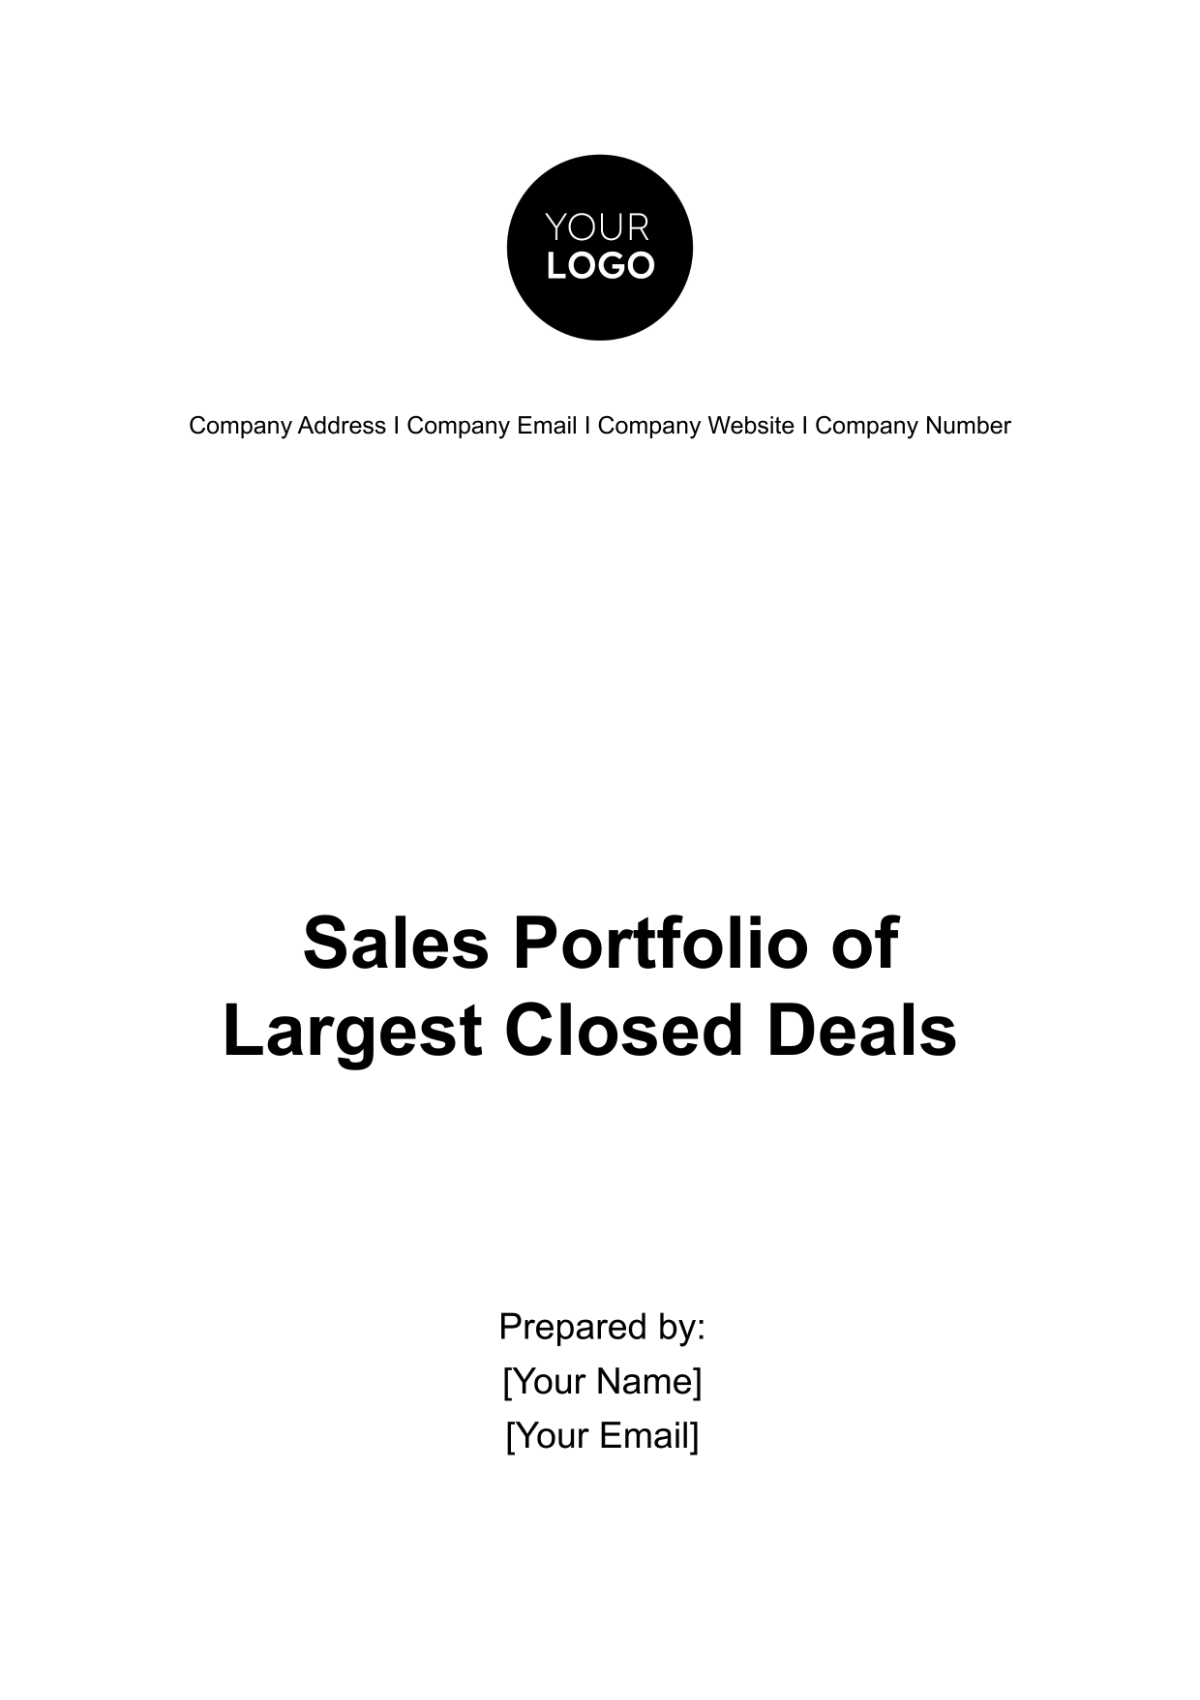 Free Sales Portfolio of Largest Closed Deals Template